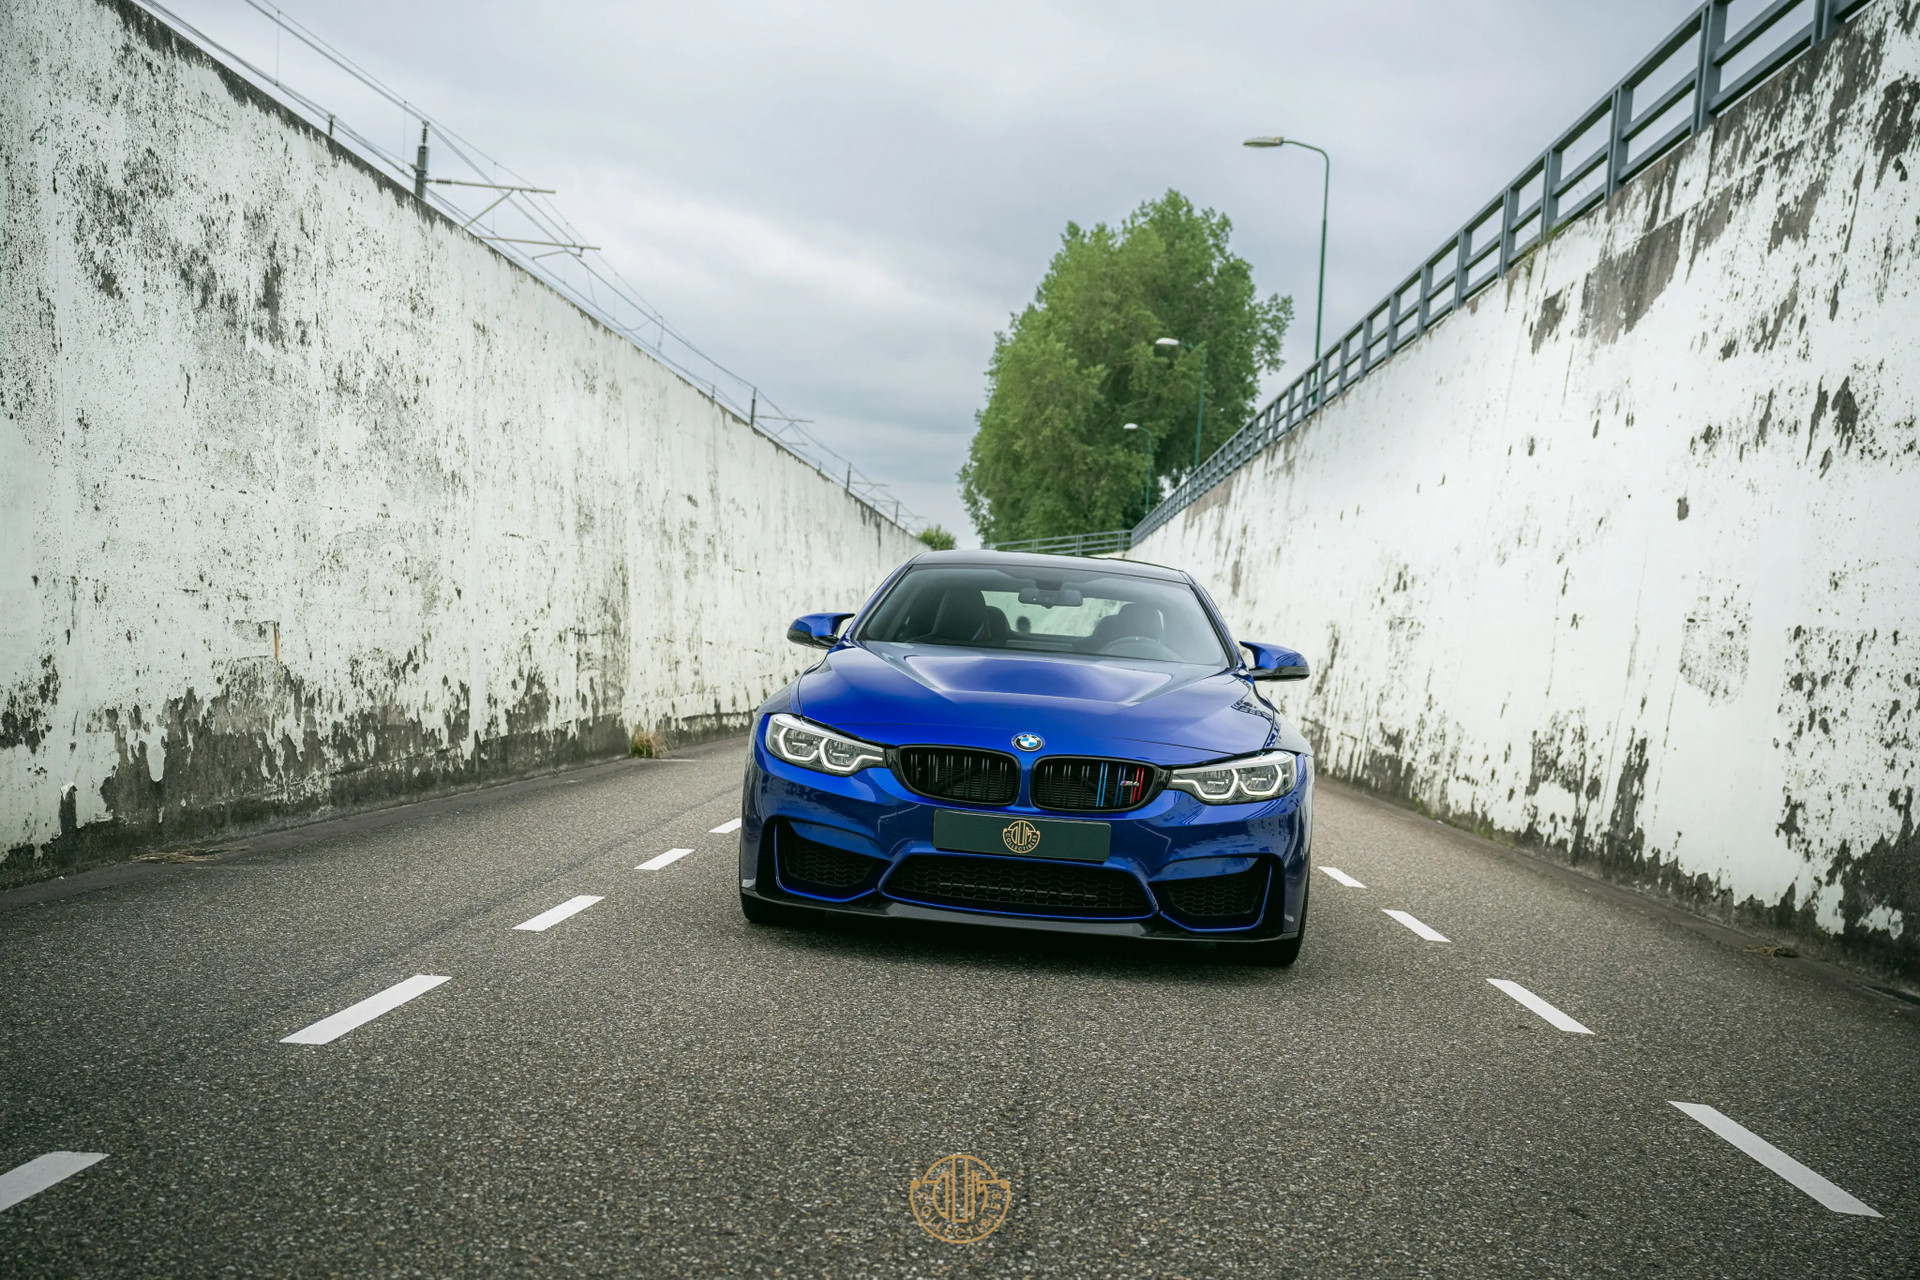 BMW 4 Serie Coupé M4 CS 2017 San marino blau metallic 20